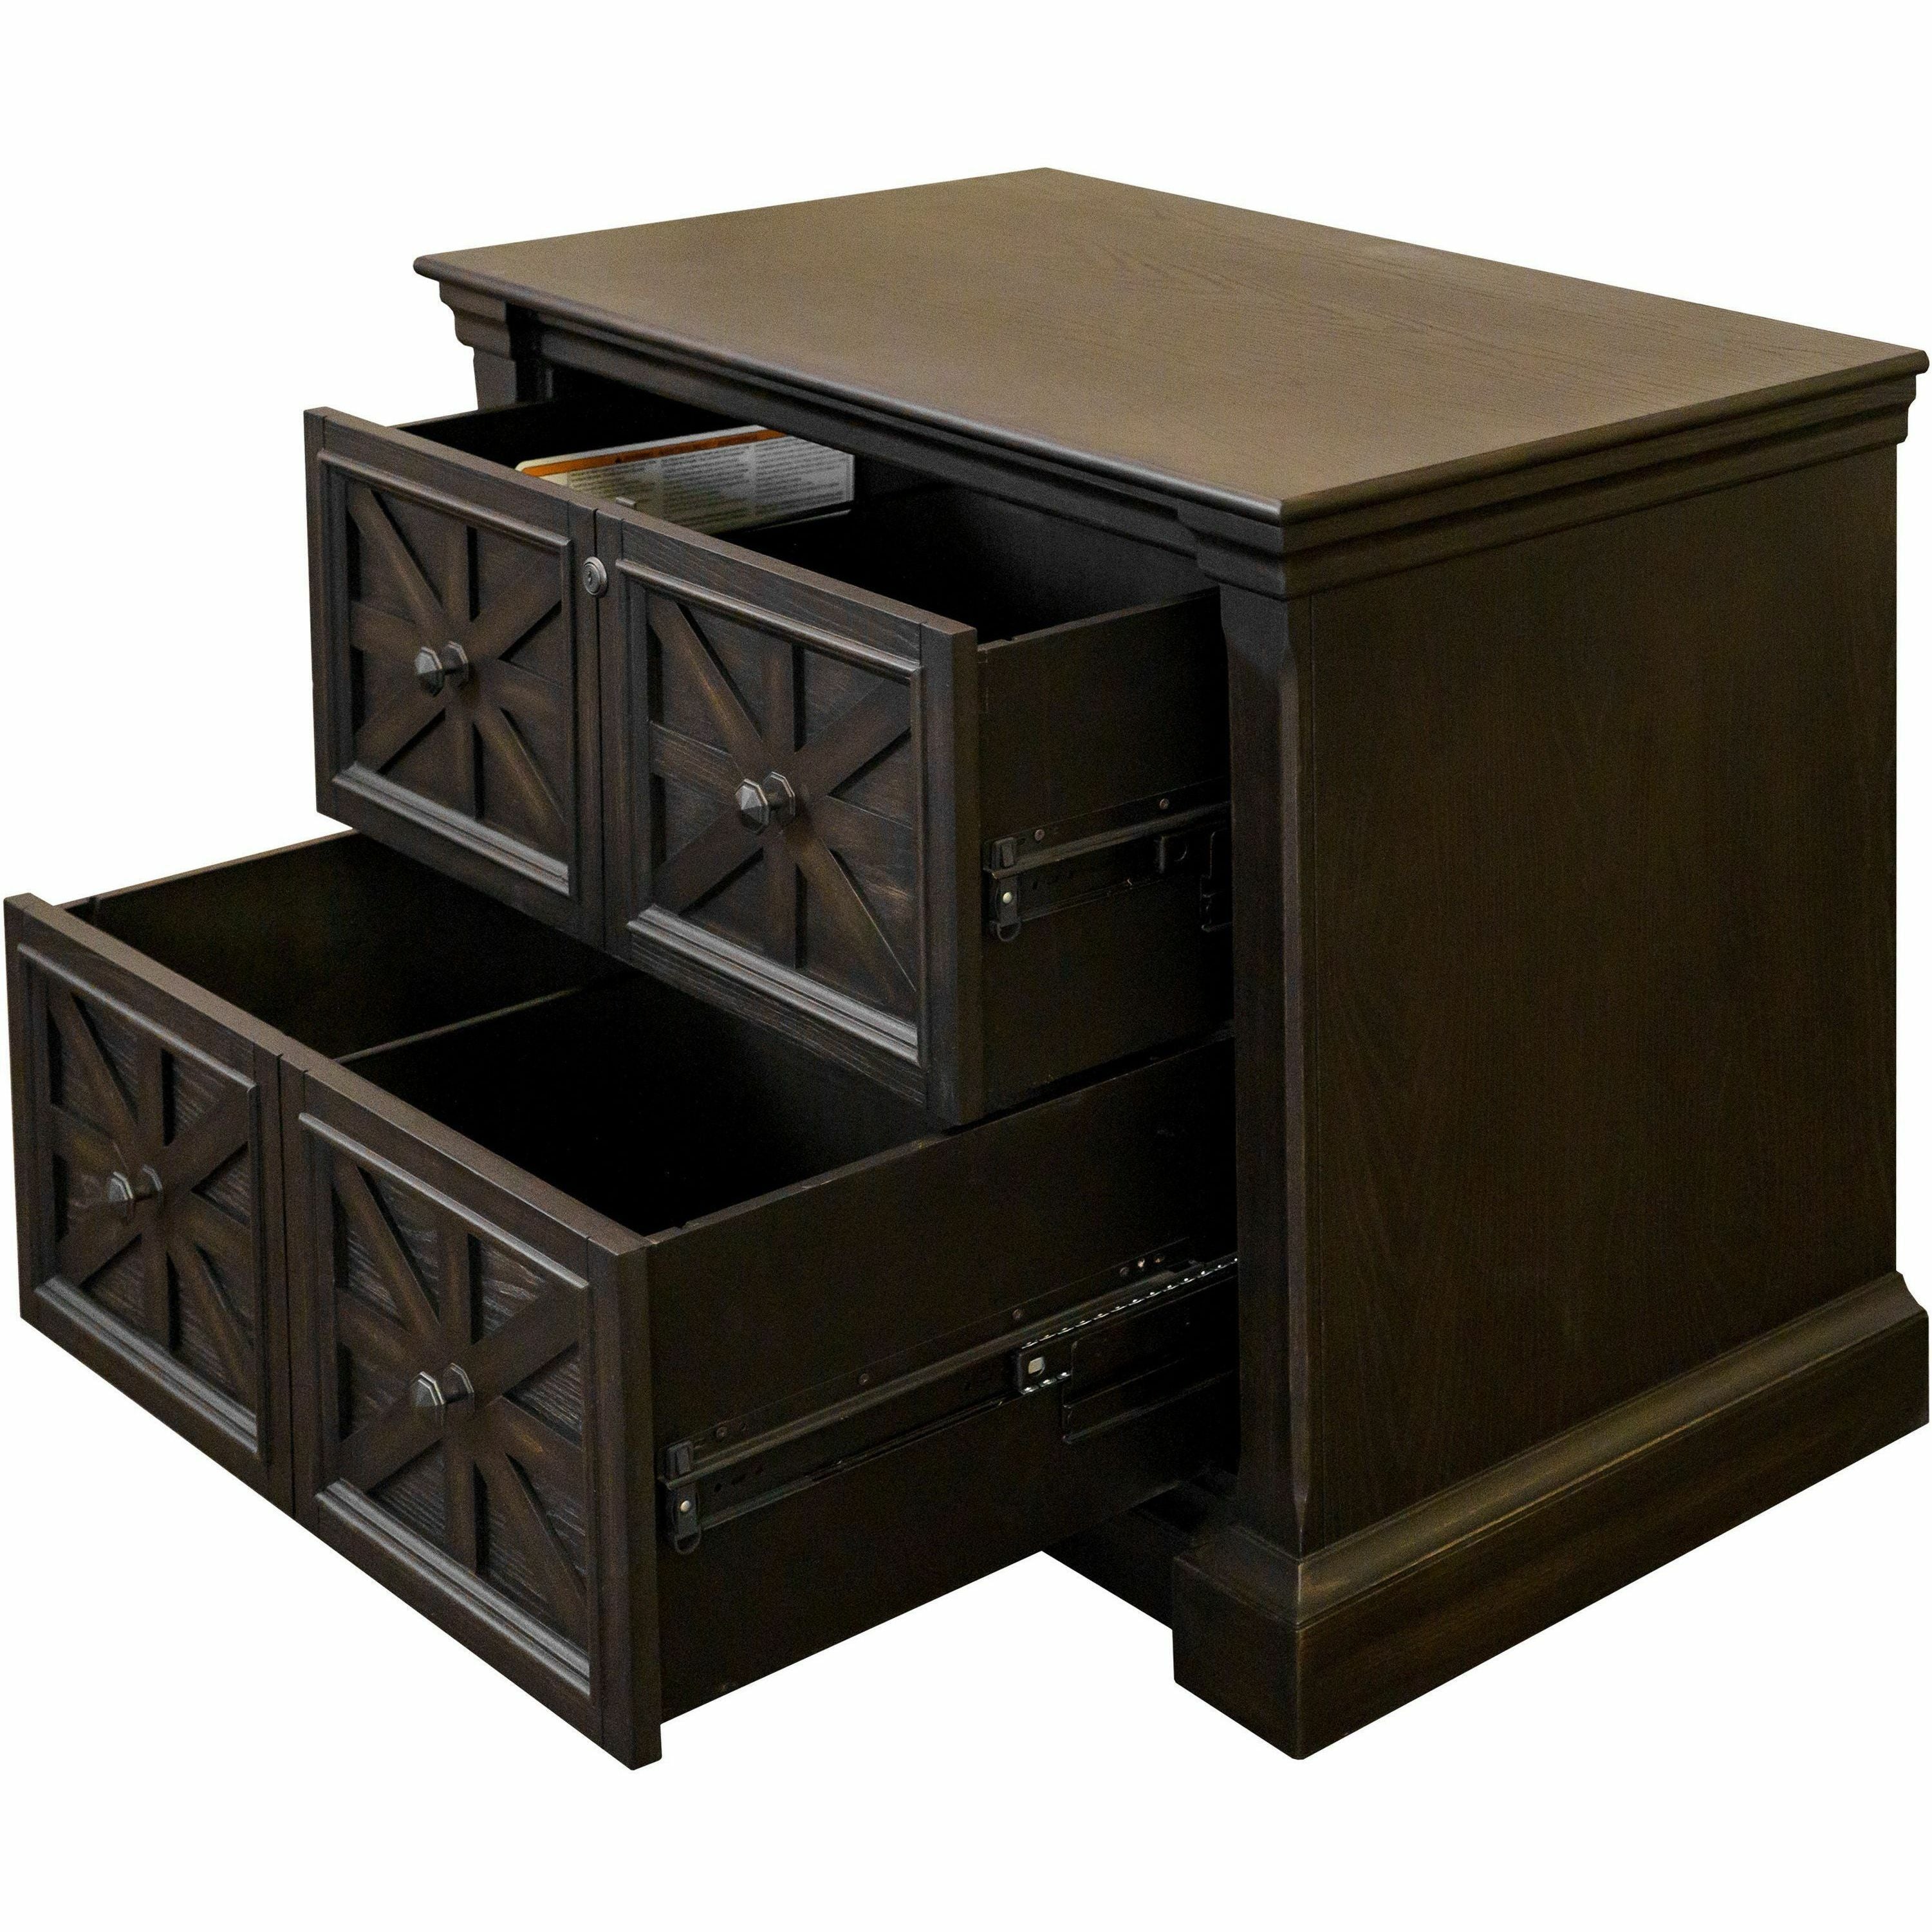 martin-kingston-office-desking-unit-36-x-2130-2-x-storage-drawers-material-wood-finish-dark-chocolate-rub-through_mrtimkn450 - 1